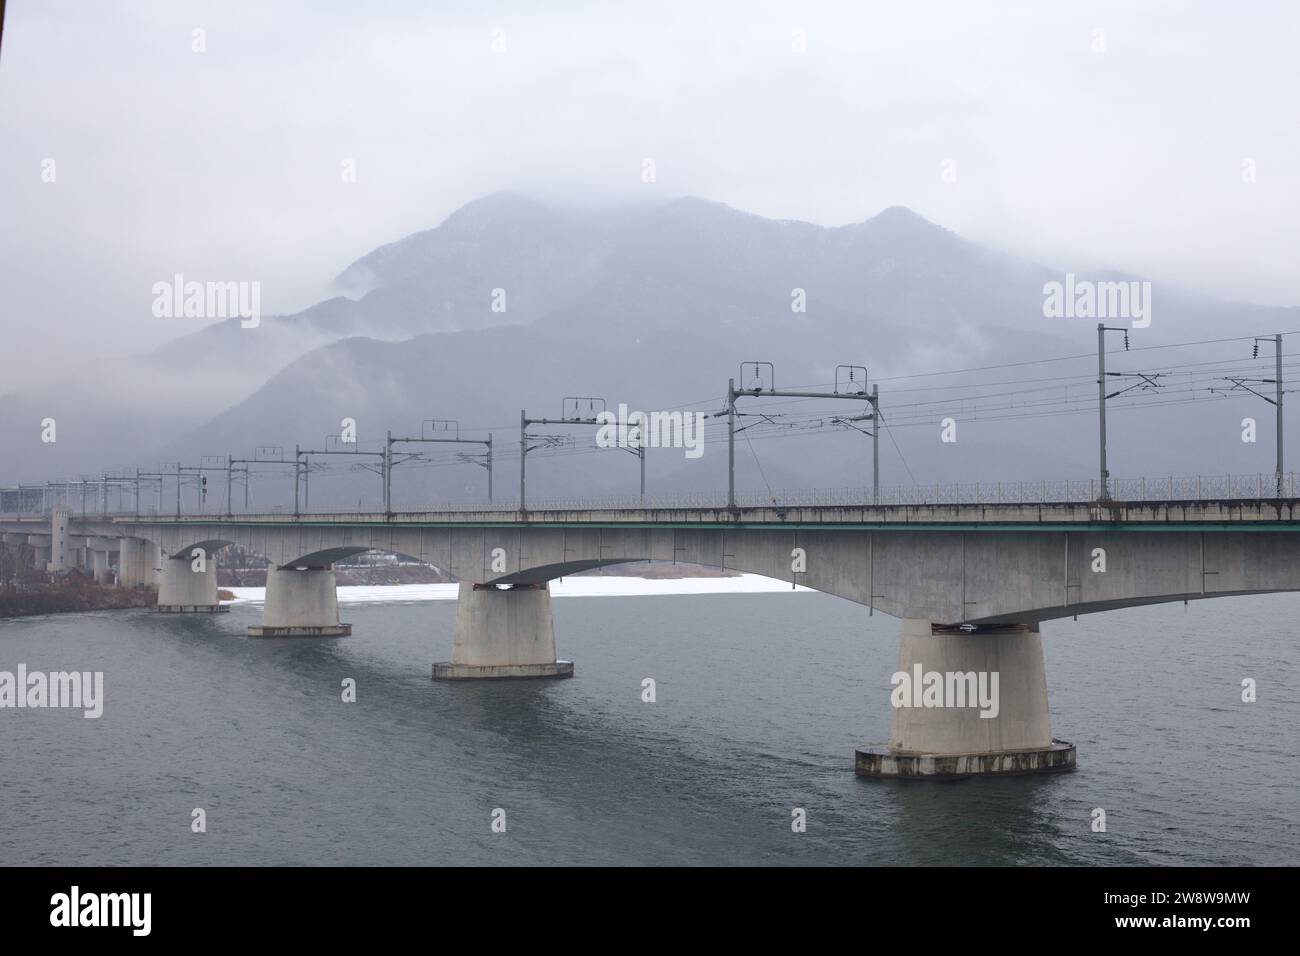 Yangpyeong County, South Korea - February 15, 2020: Amidst winter's embrace, the modernized Yangsu Railway Bridge stands over the North Han River, wit Stock Photo